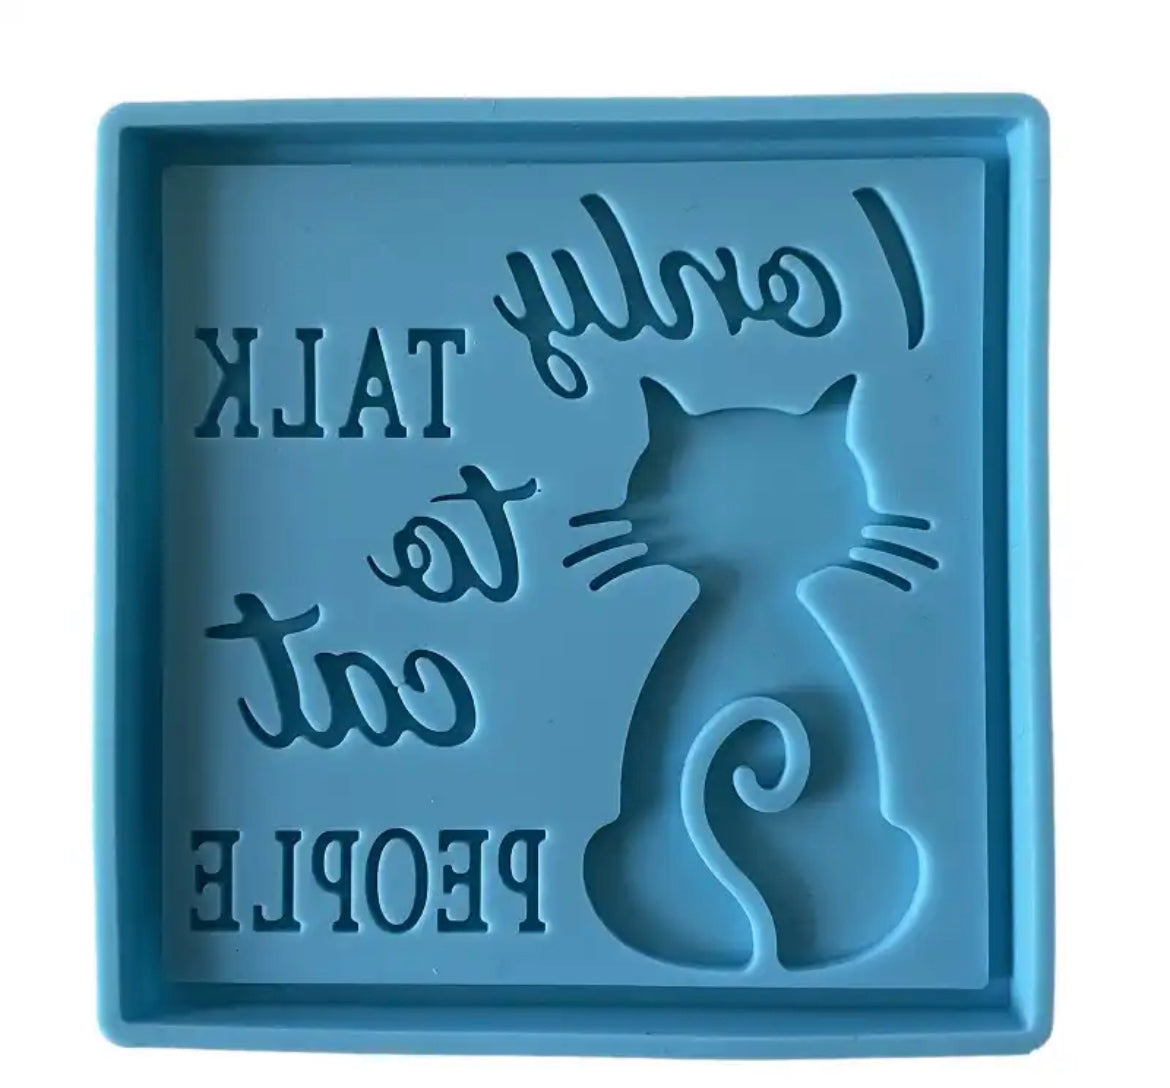 Cat coaster molds